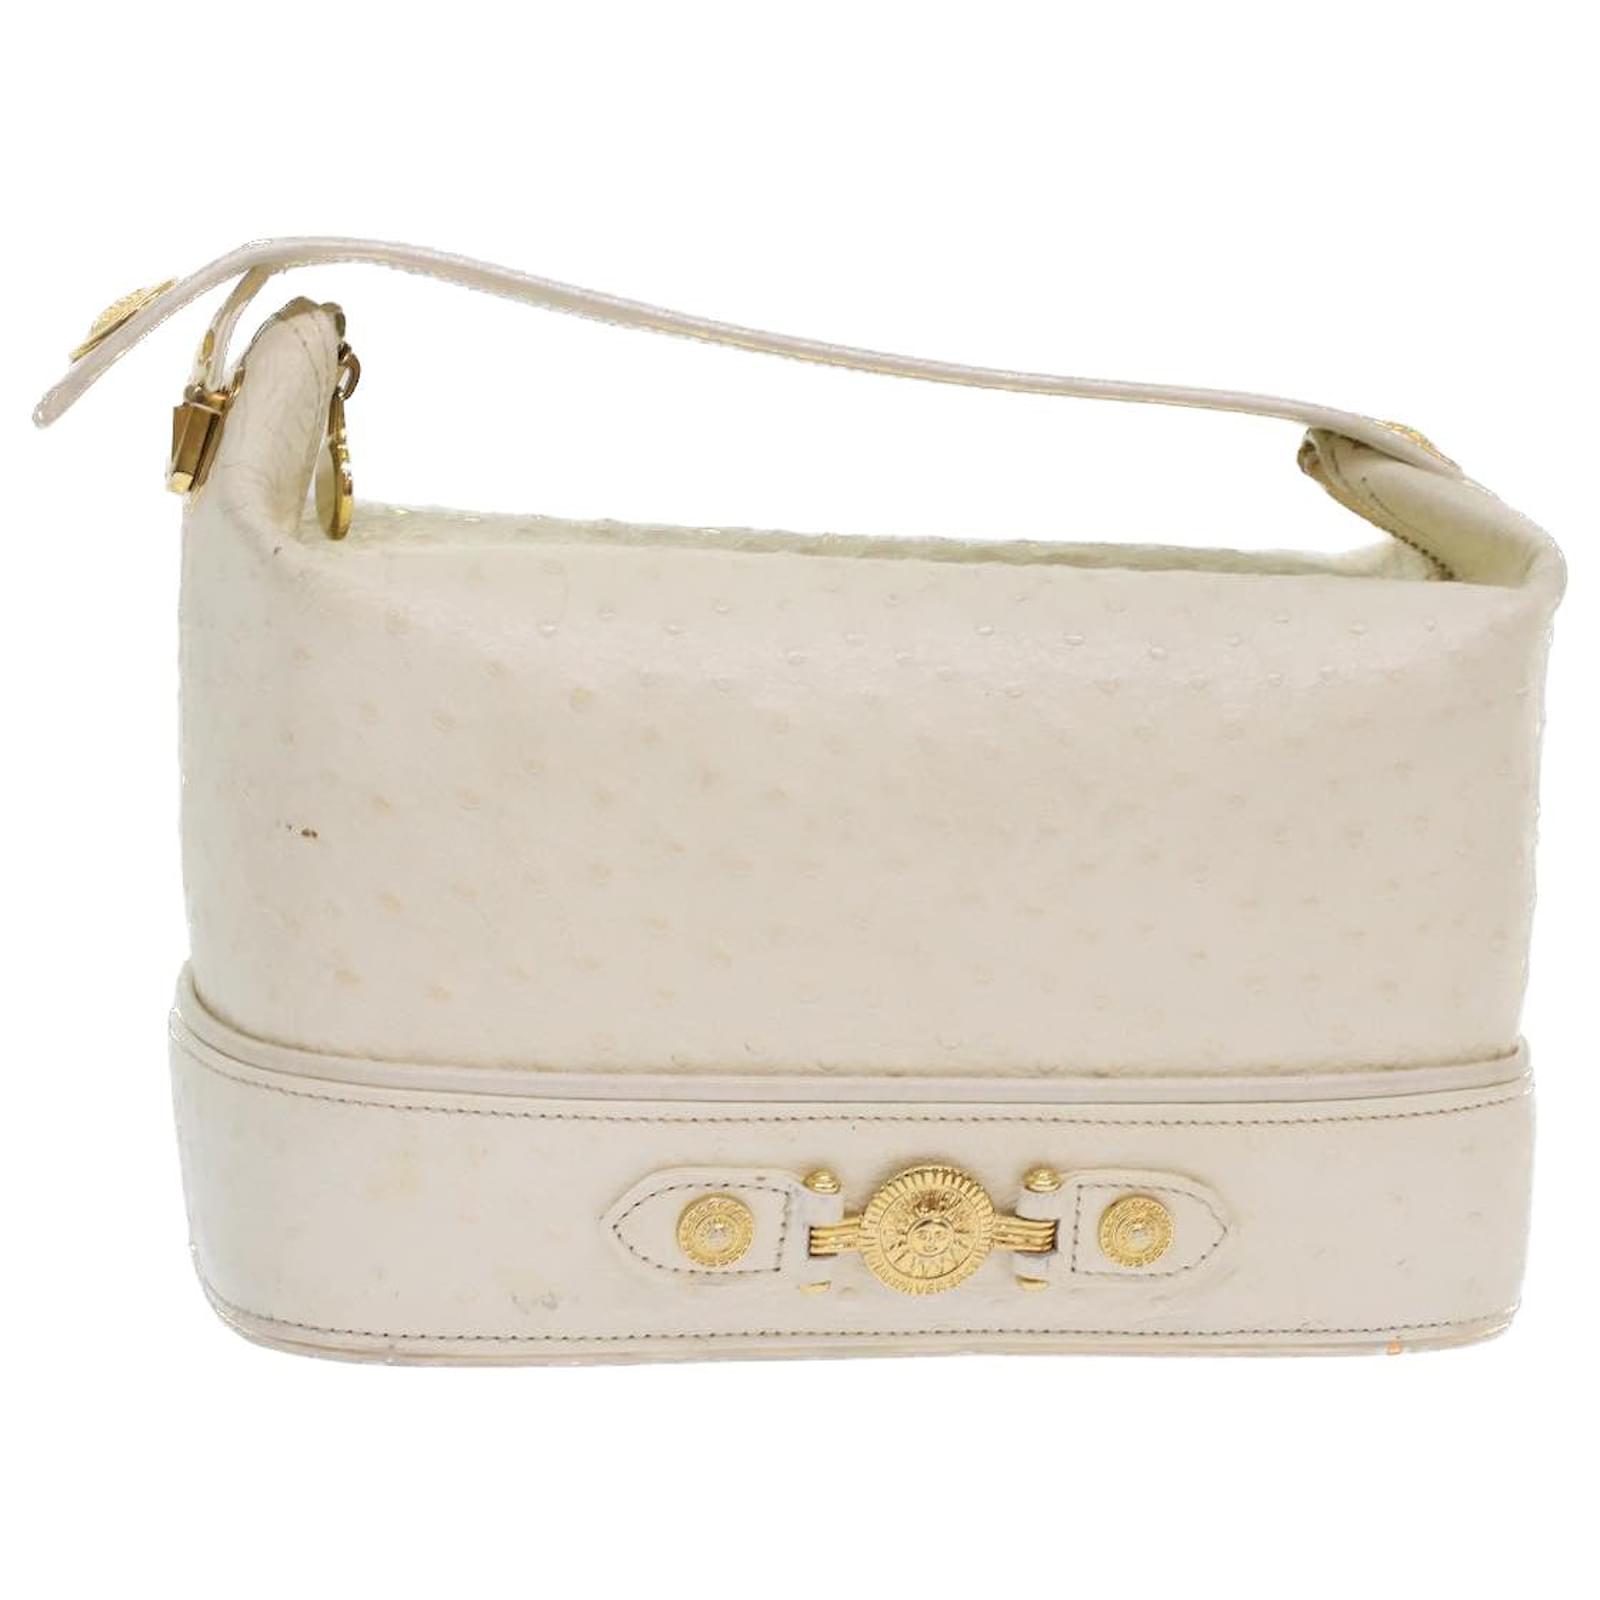 SOLD**Gianni Versace Handbag  Versace handbags, Versace bags, Gold handbags